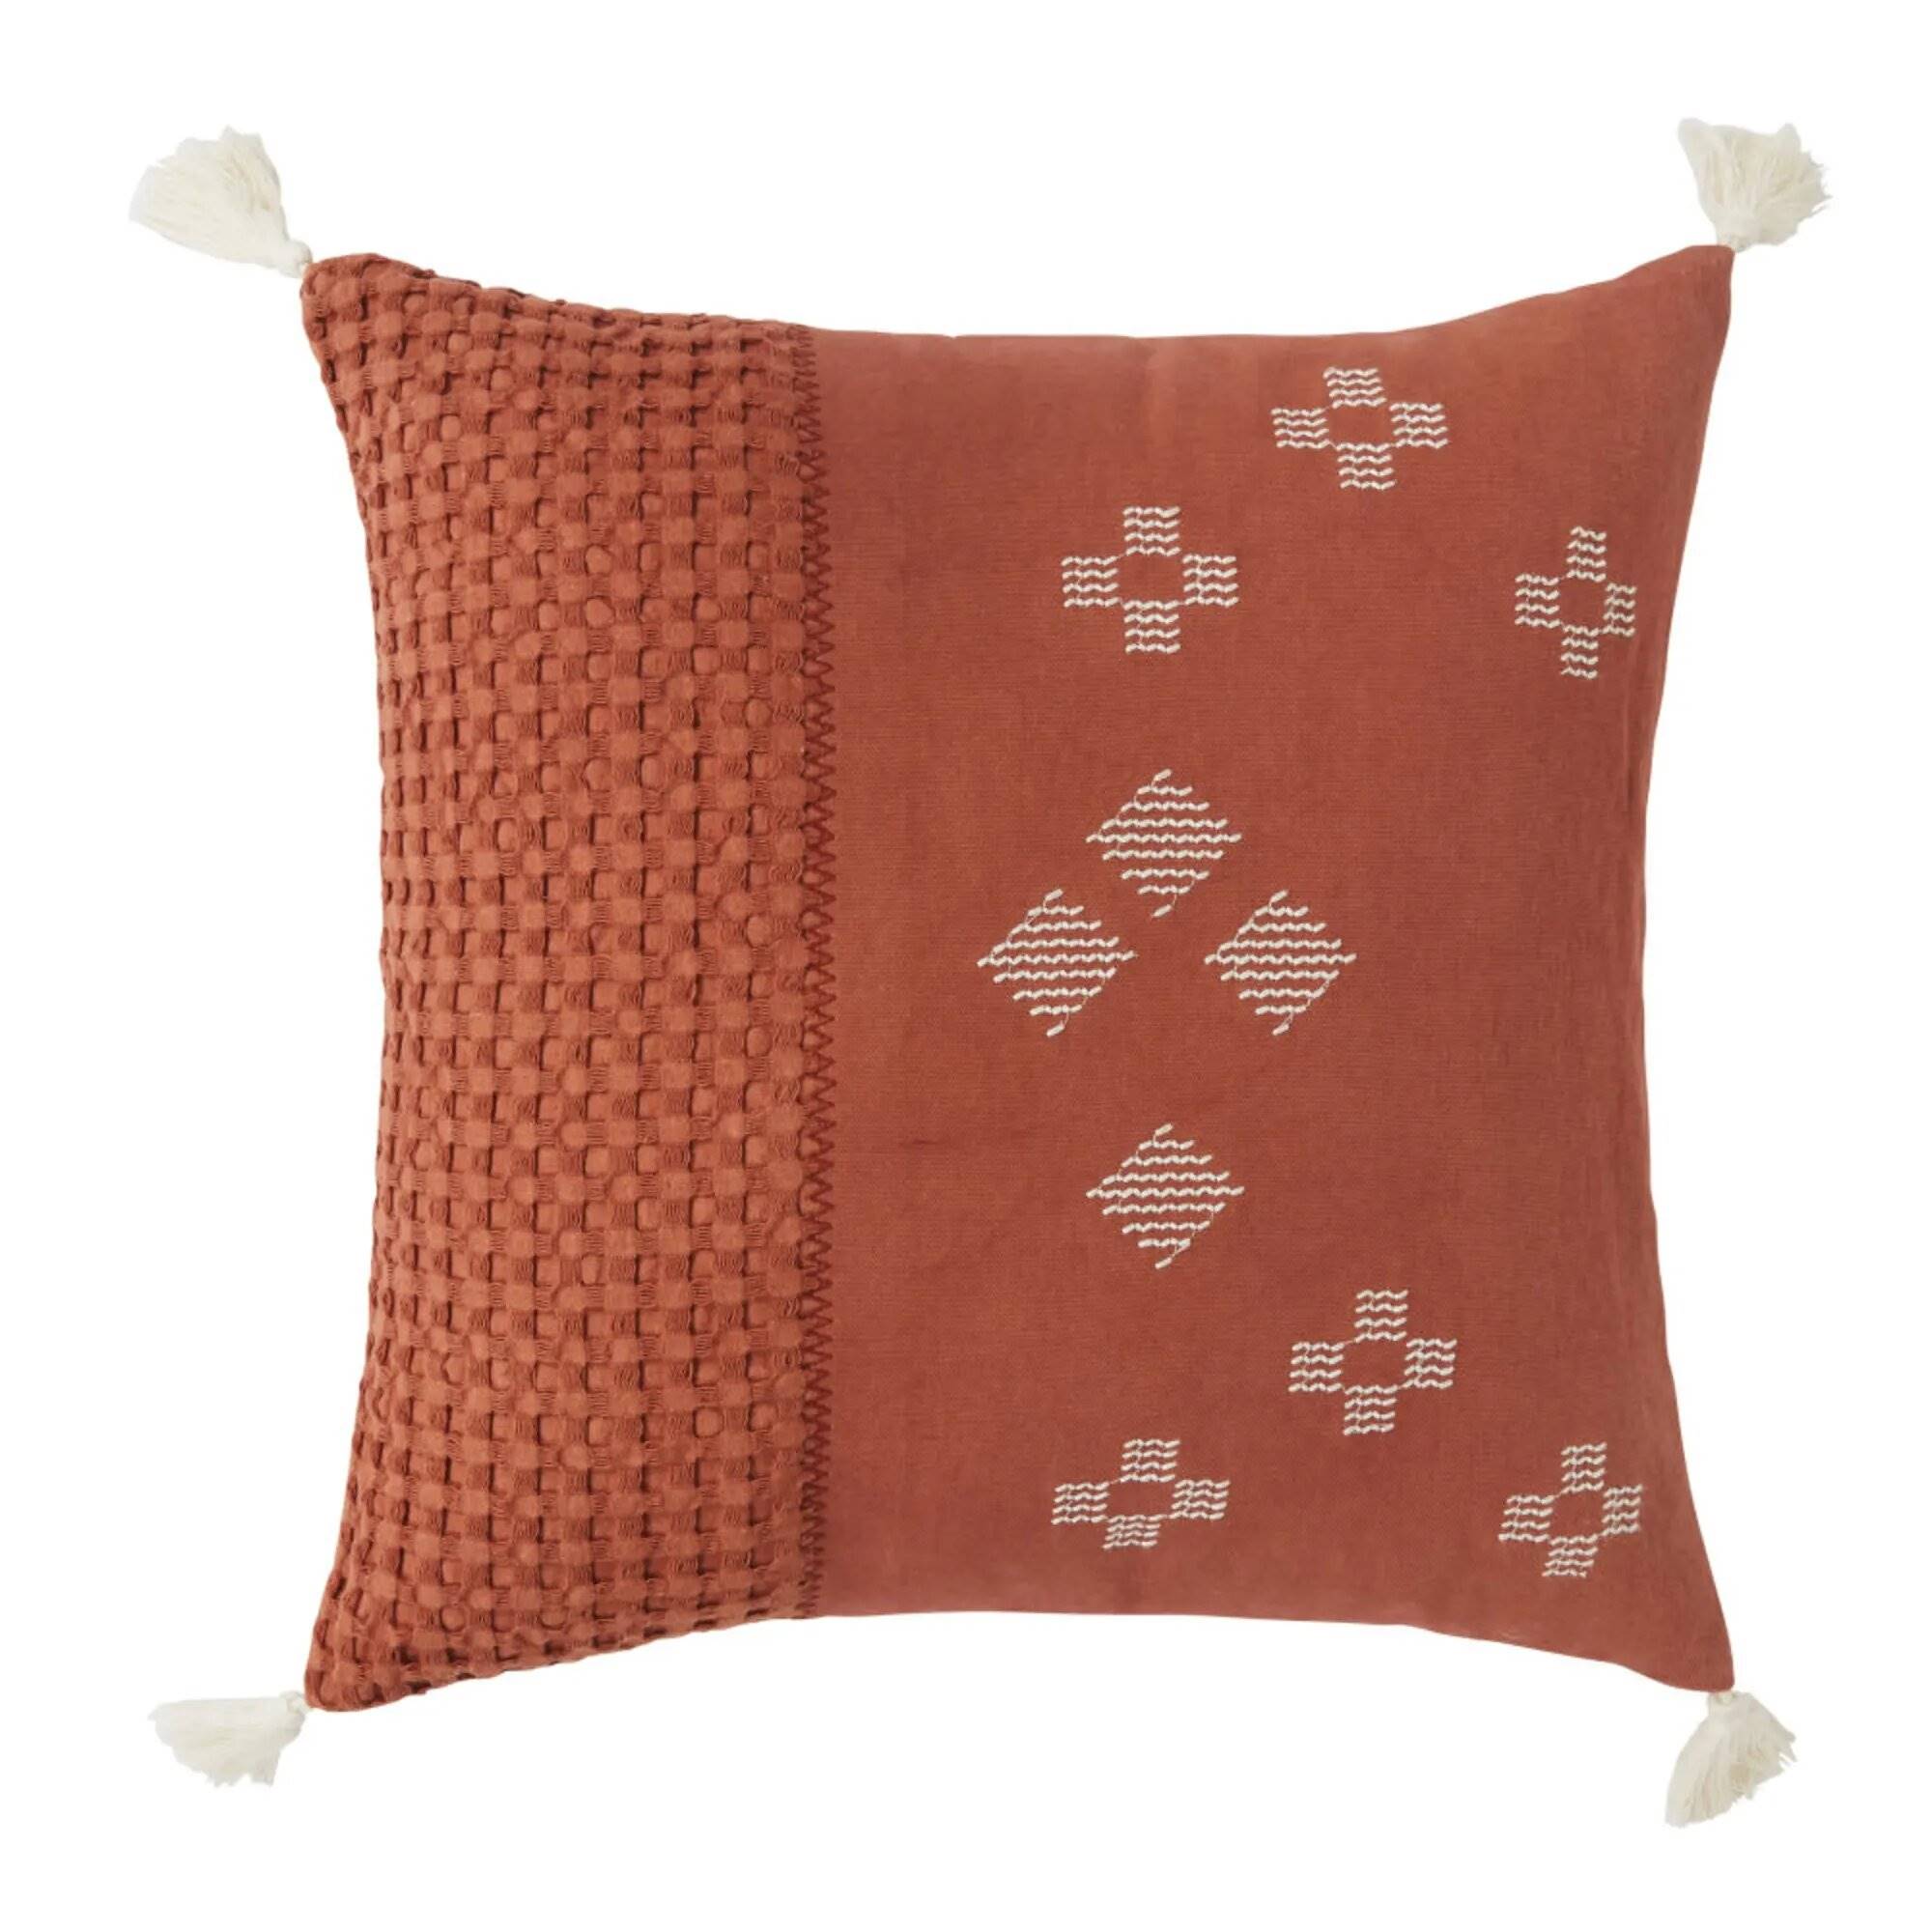 Cojín de algodón terracota con bordados y adornos color crudo de Maisons du Monde